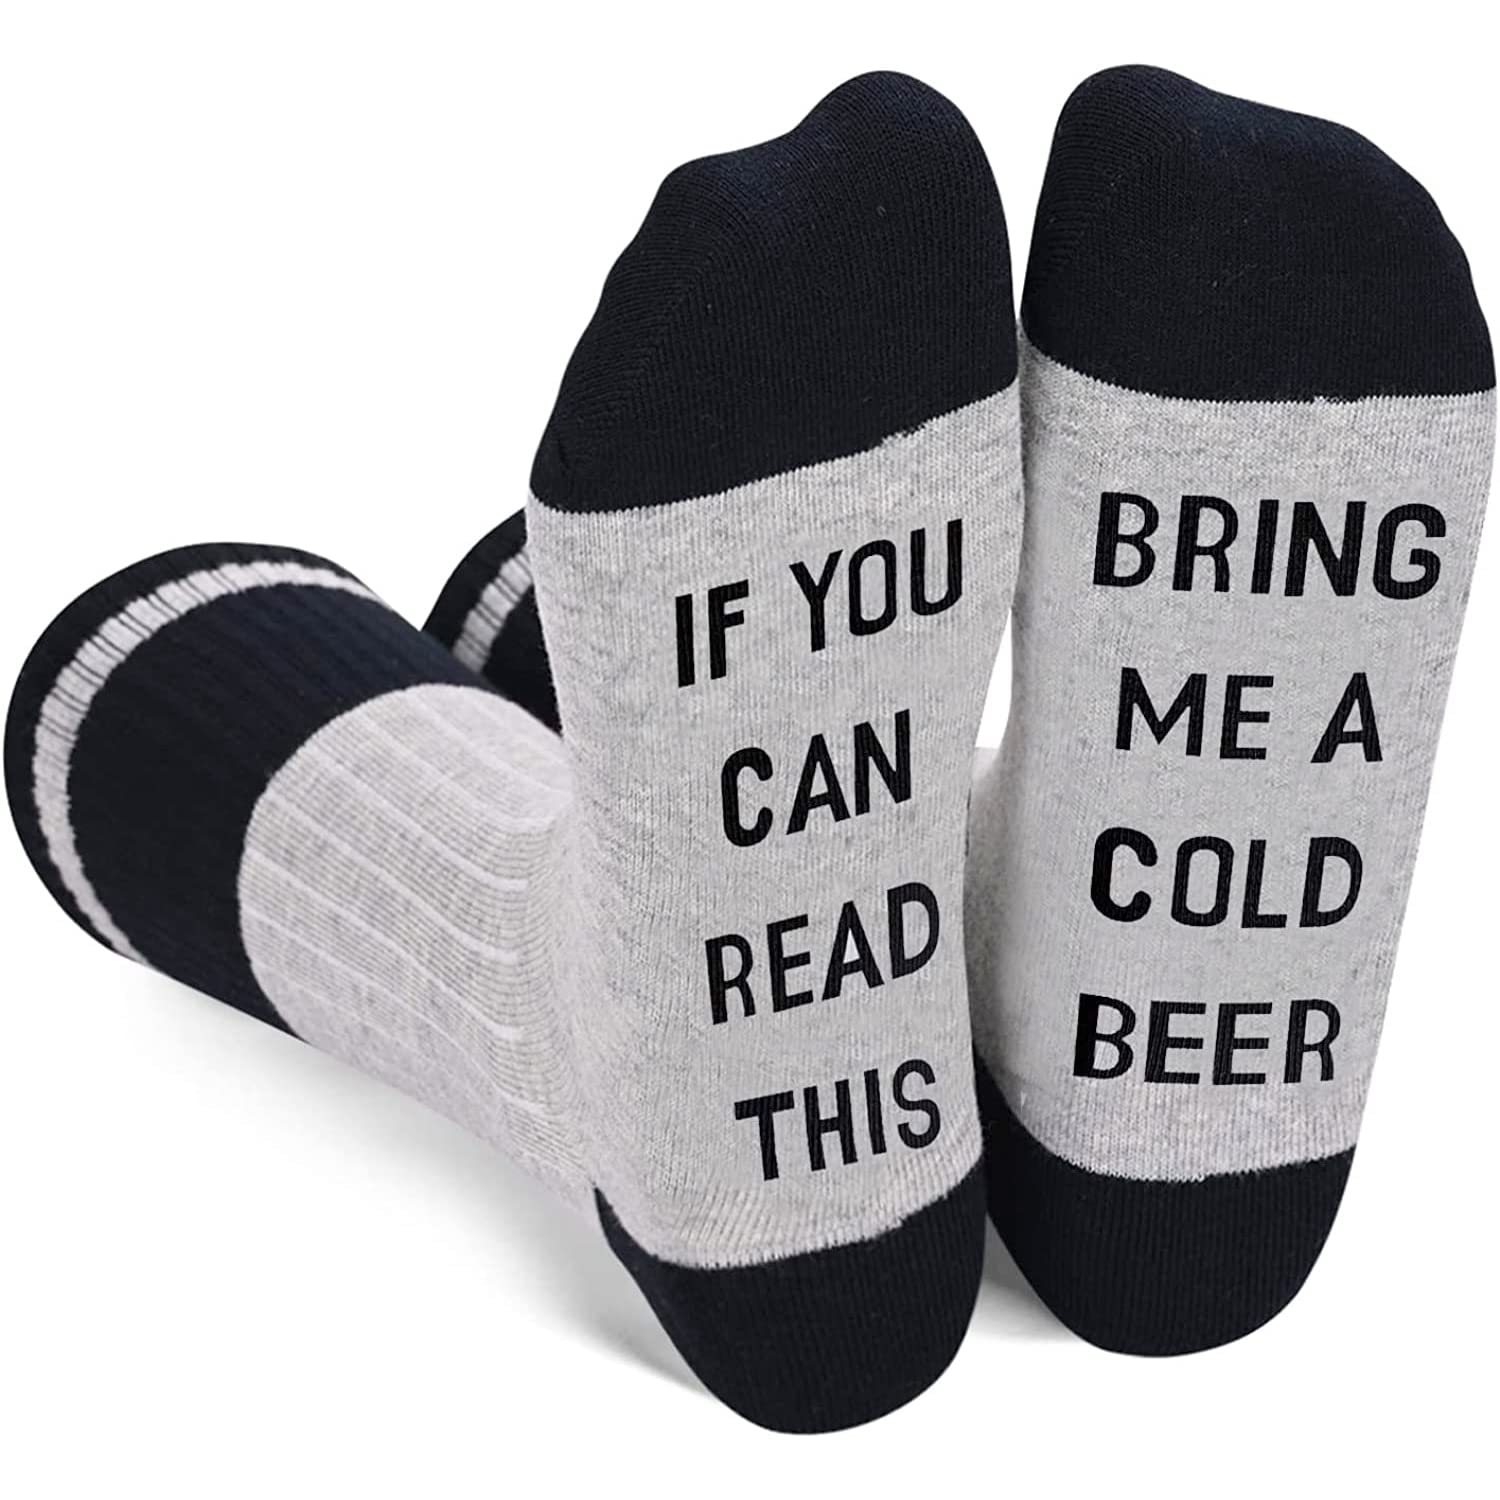 Zmart Funny Novelty Crazy Socks for Men, Gifts for Him, Stocking Stuffers for Teens